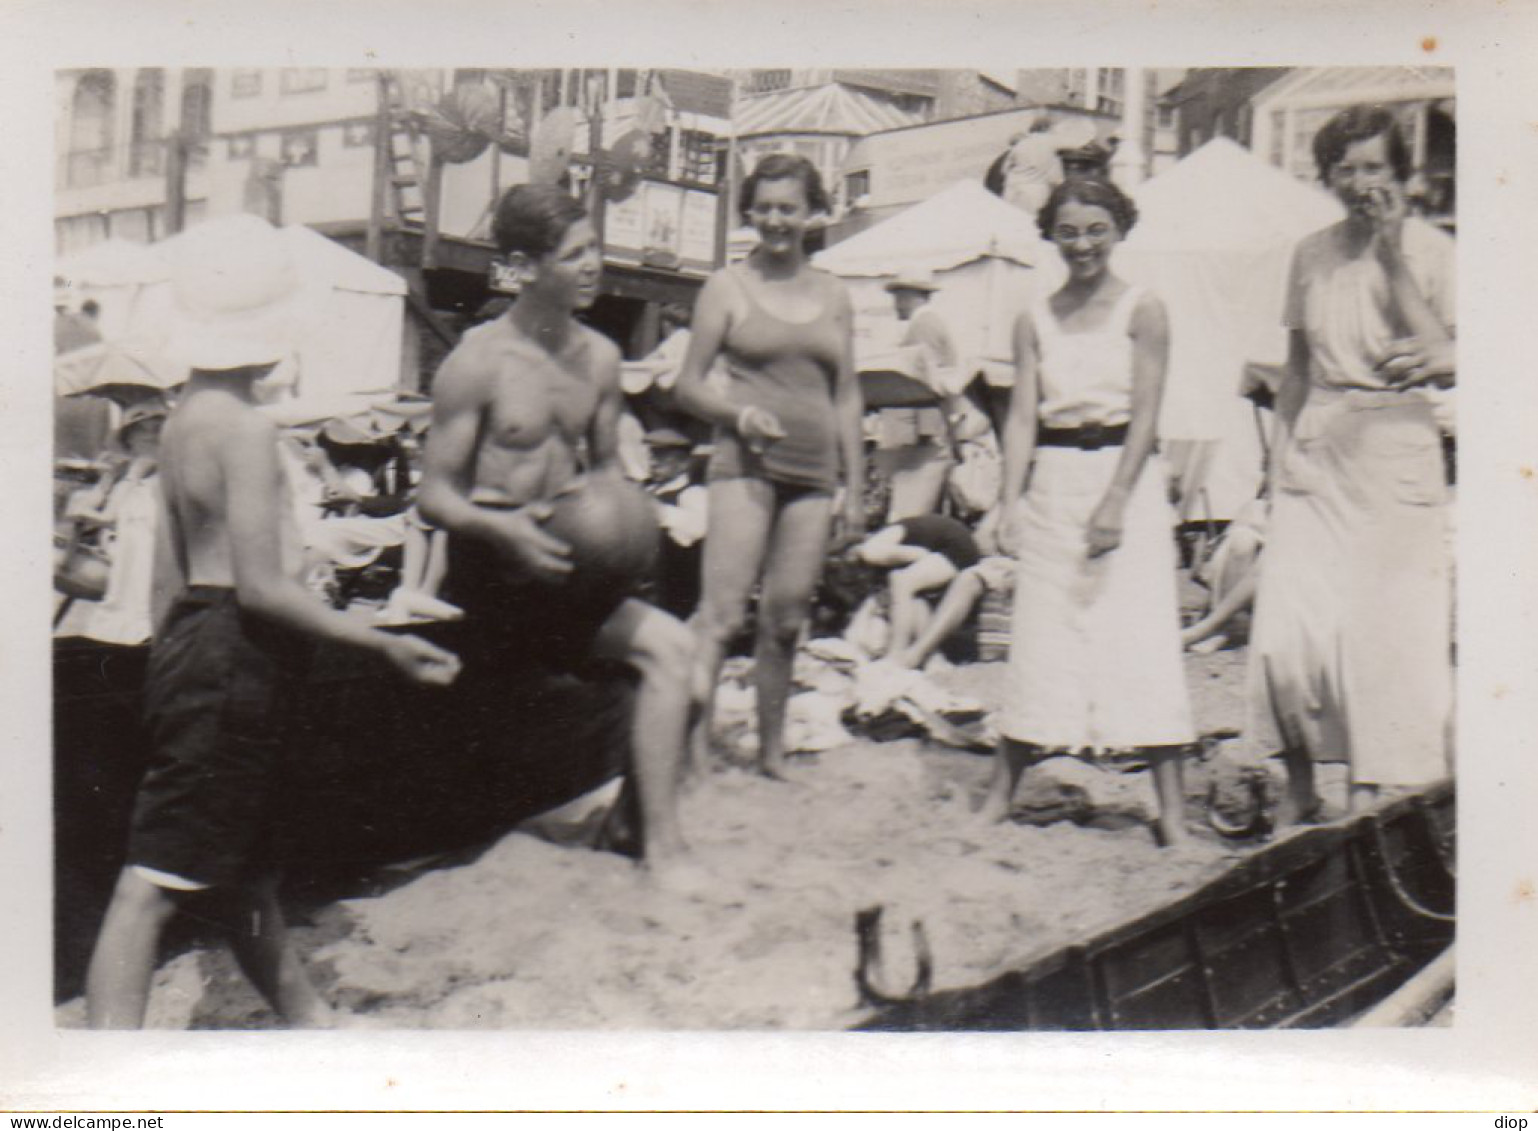 Photographie Photo Vintage Snapshot Famille Family Plage Beach - Lieux